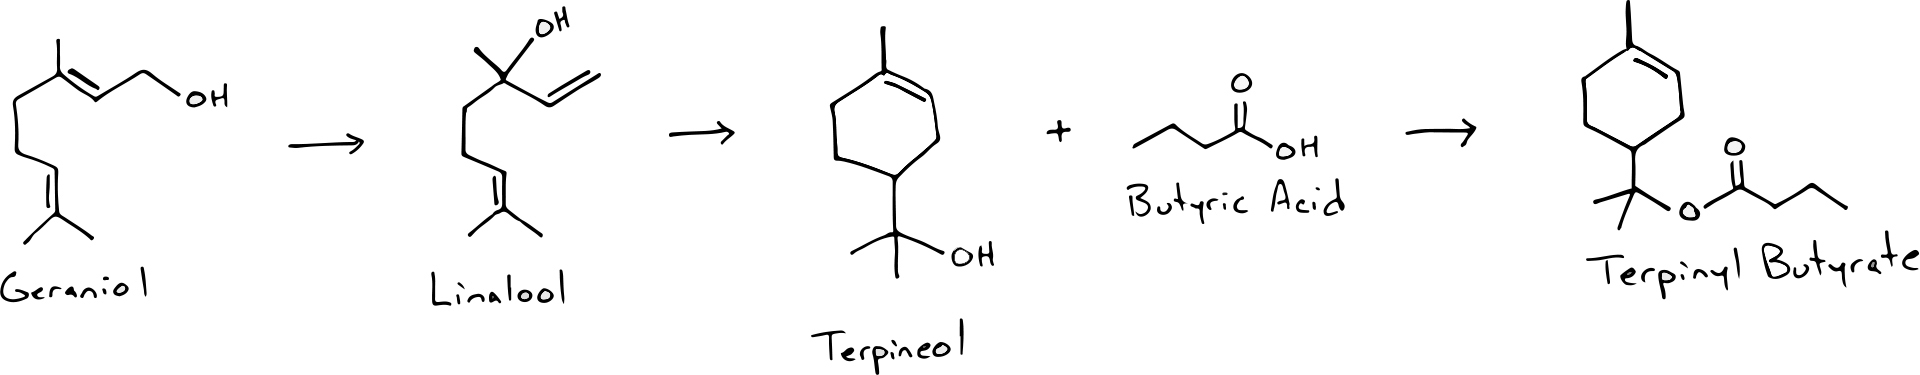 Terpinyl Butyrate